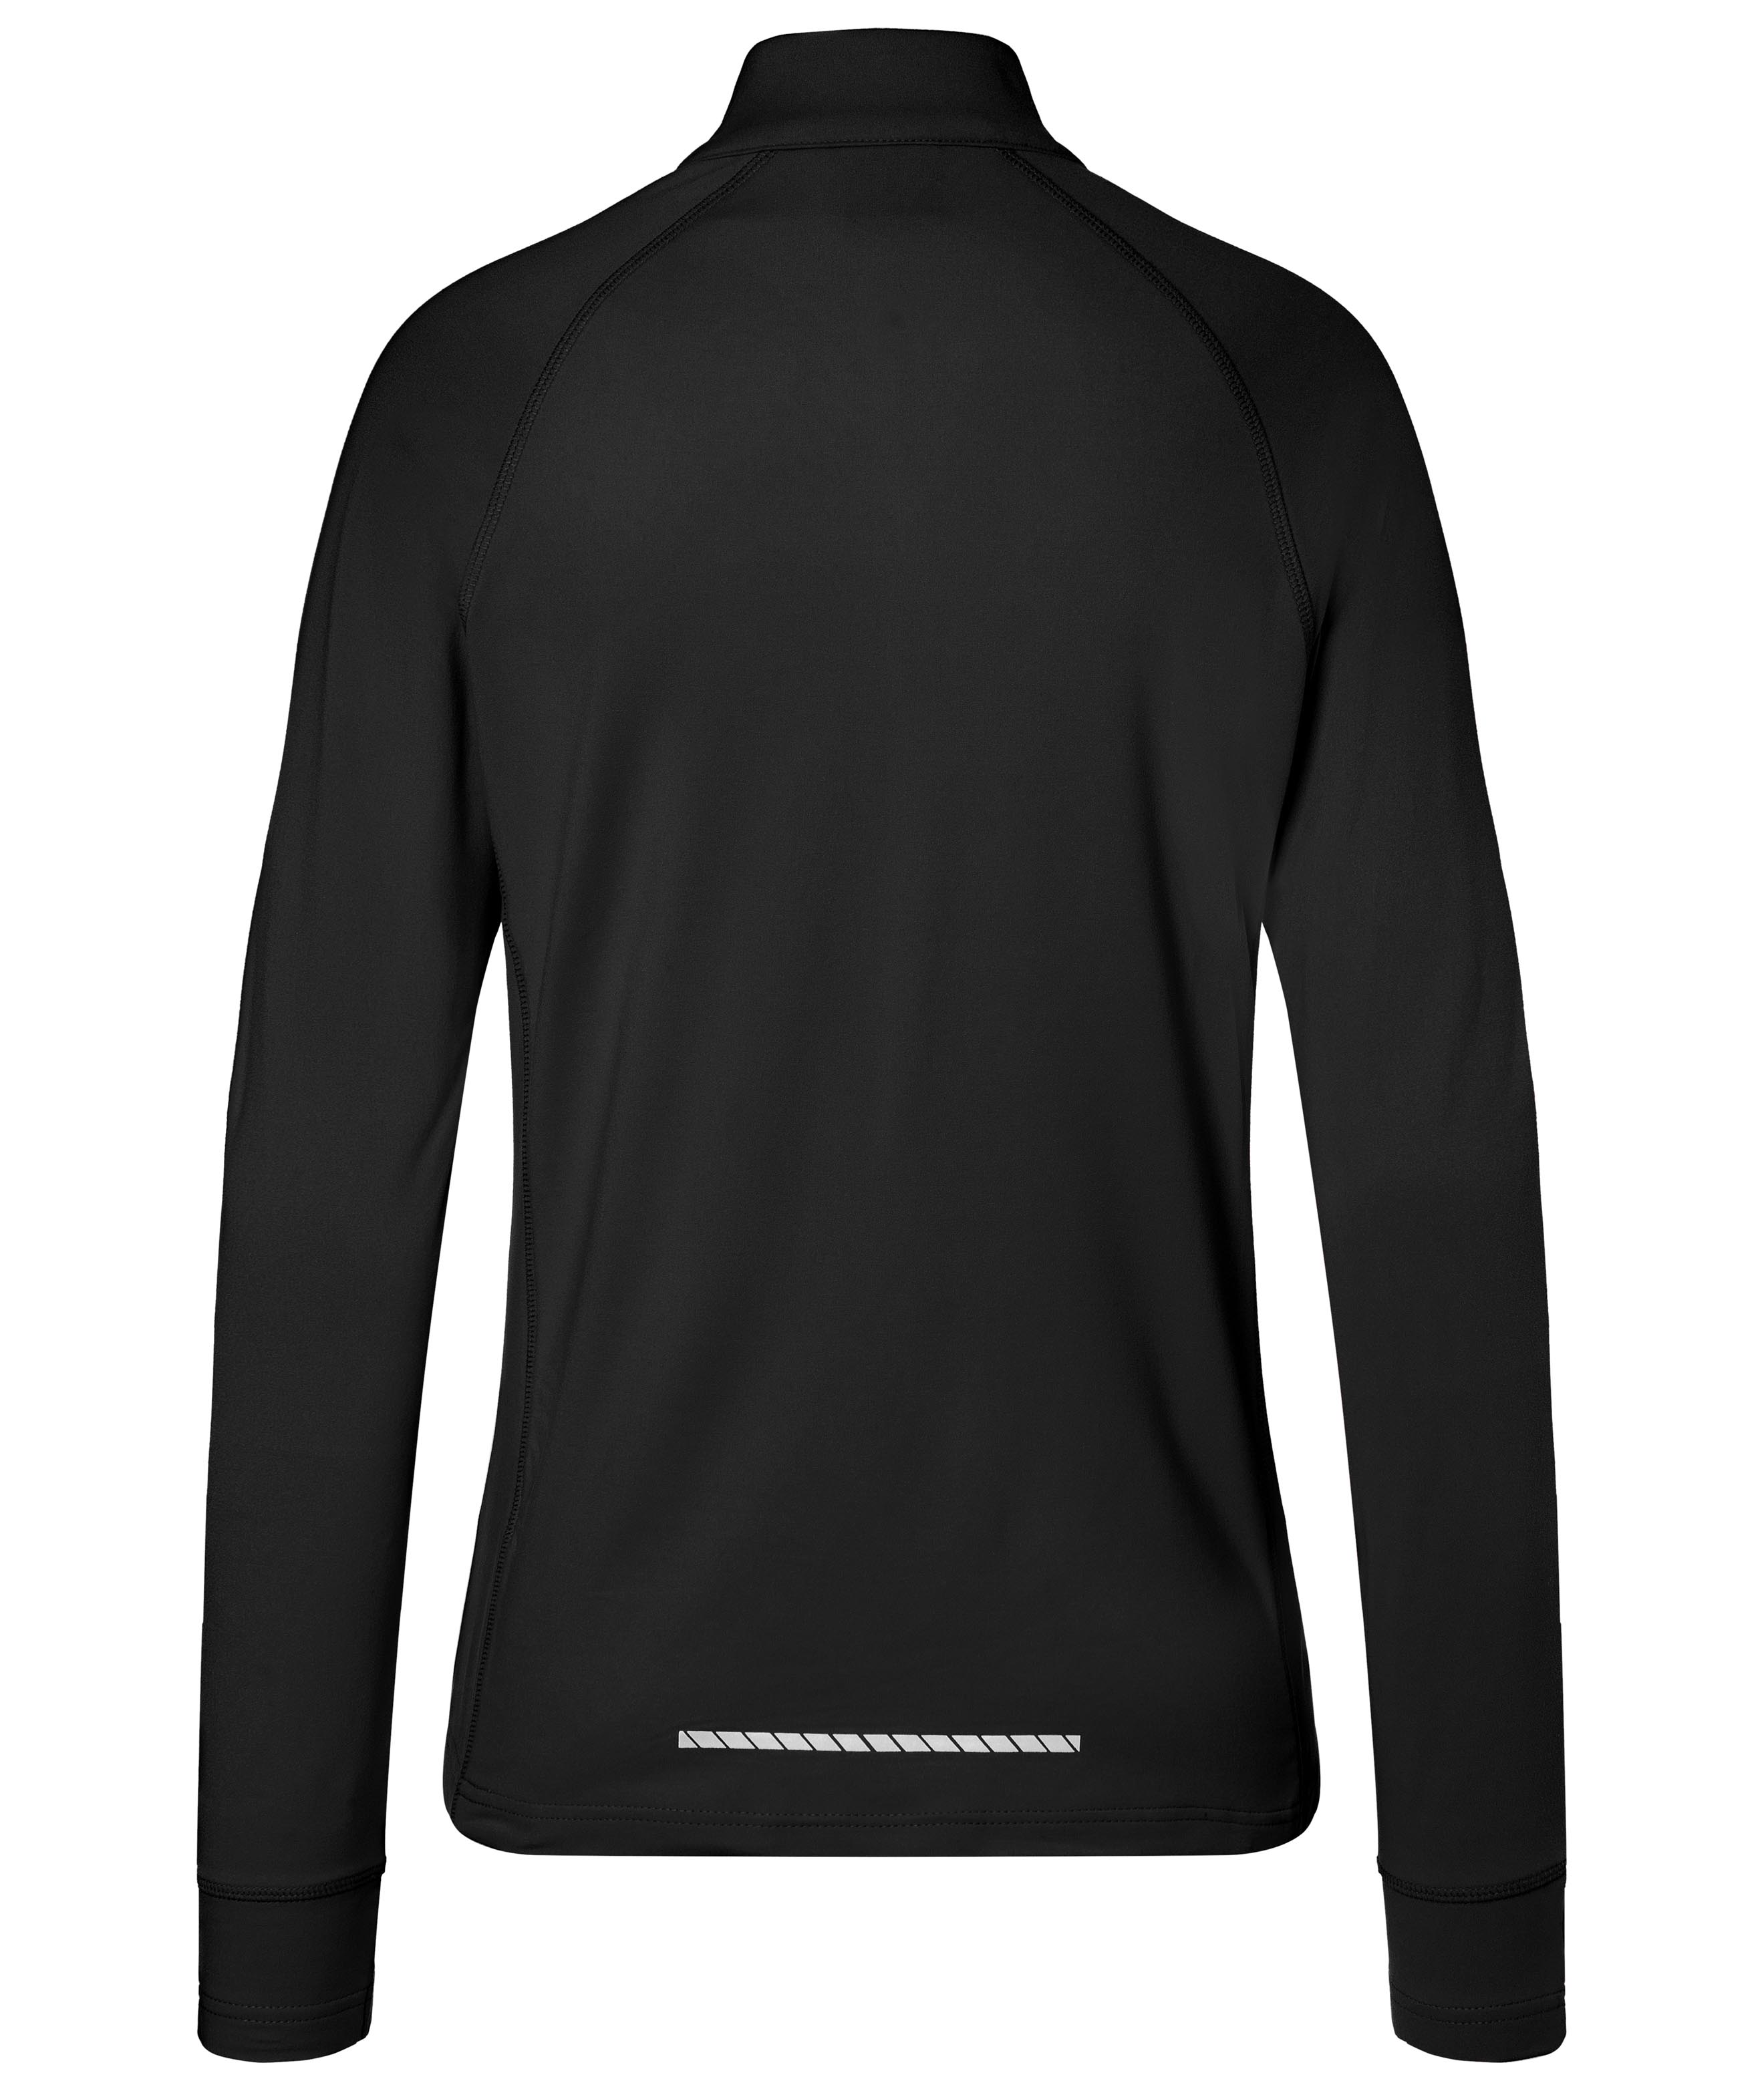 Ladies Ladies' Sports Shirt Halfzip Black-Daiber